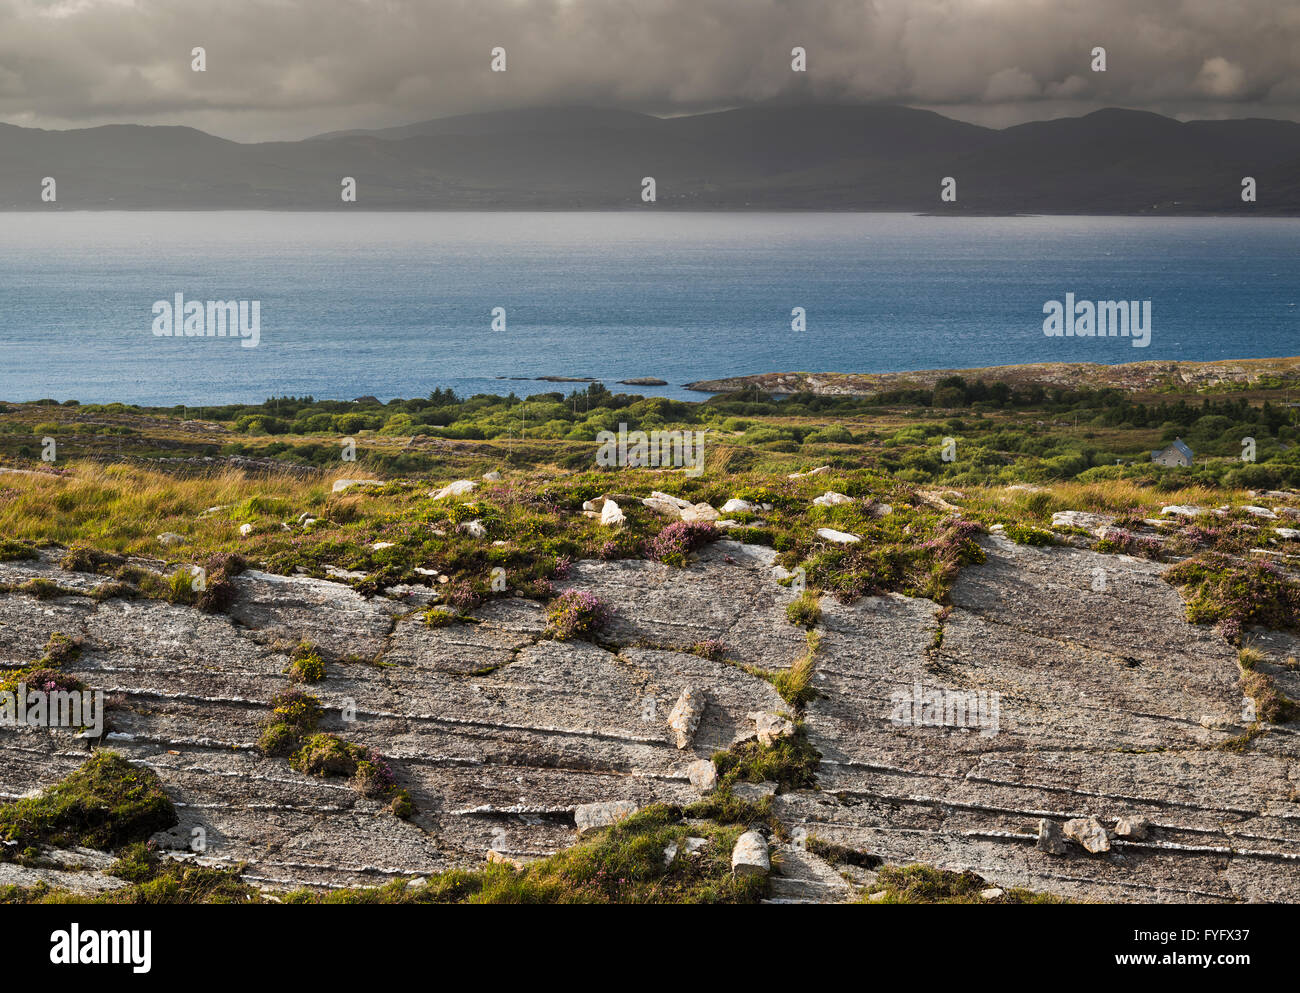 View from Kilcatherine, Beara Peninsula, County Cork, Ireland, across Kenmare Bay to the mountains of the Iveragh Peninsula Stock Photo